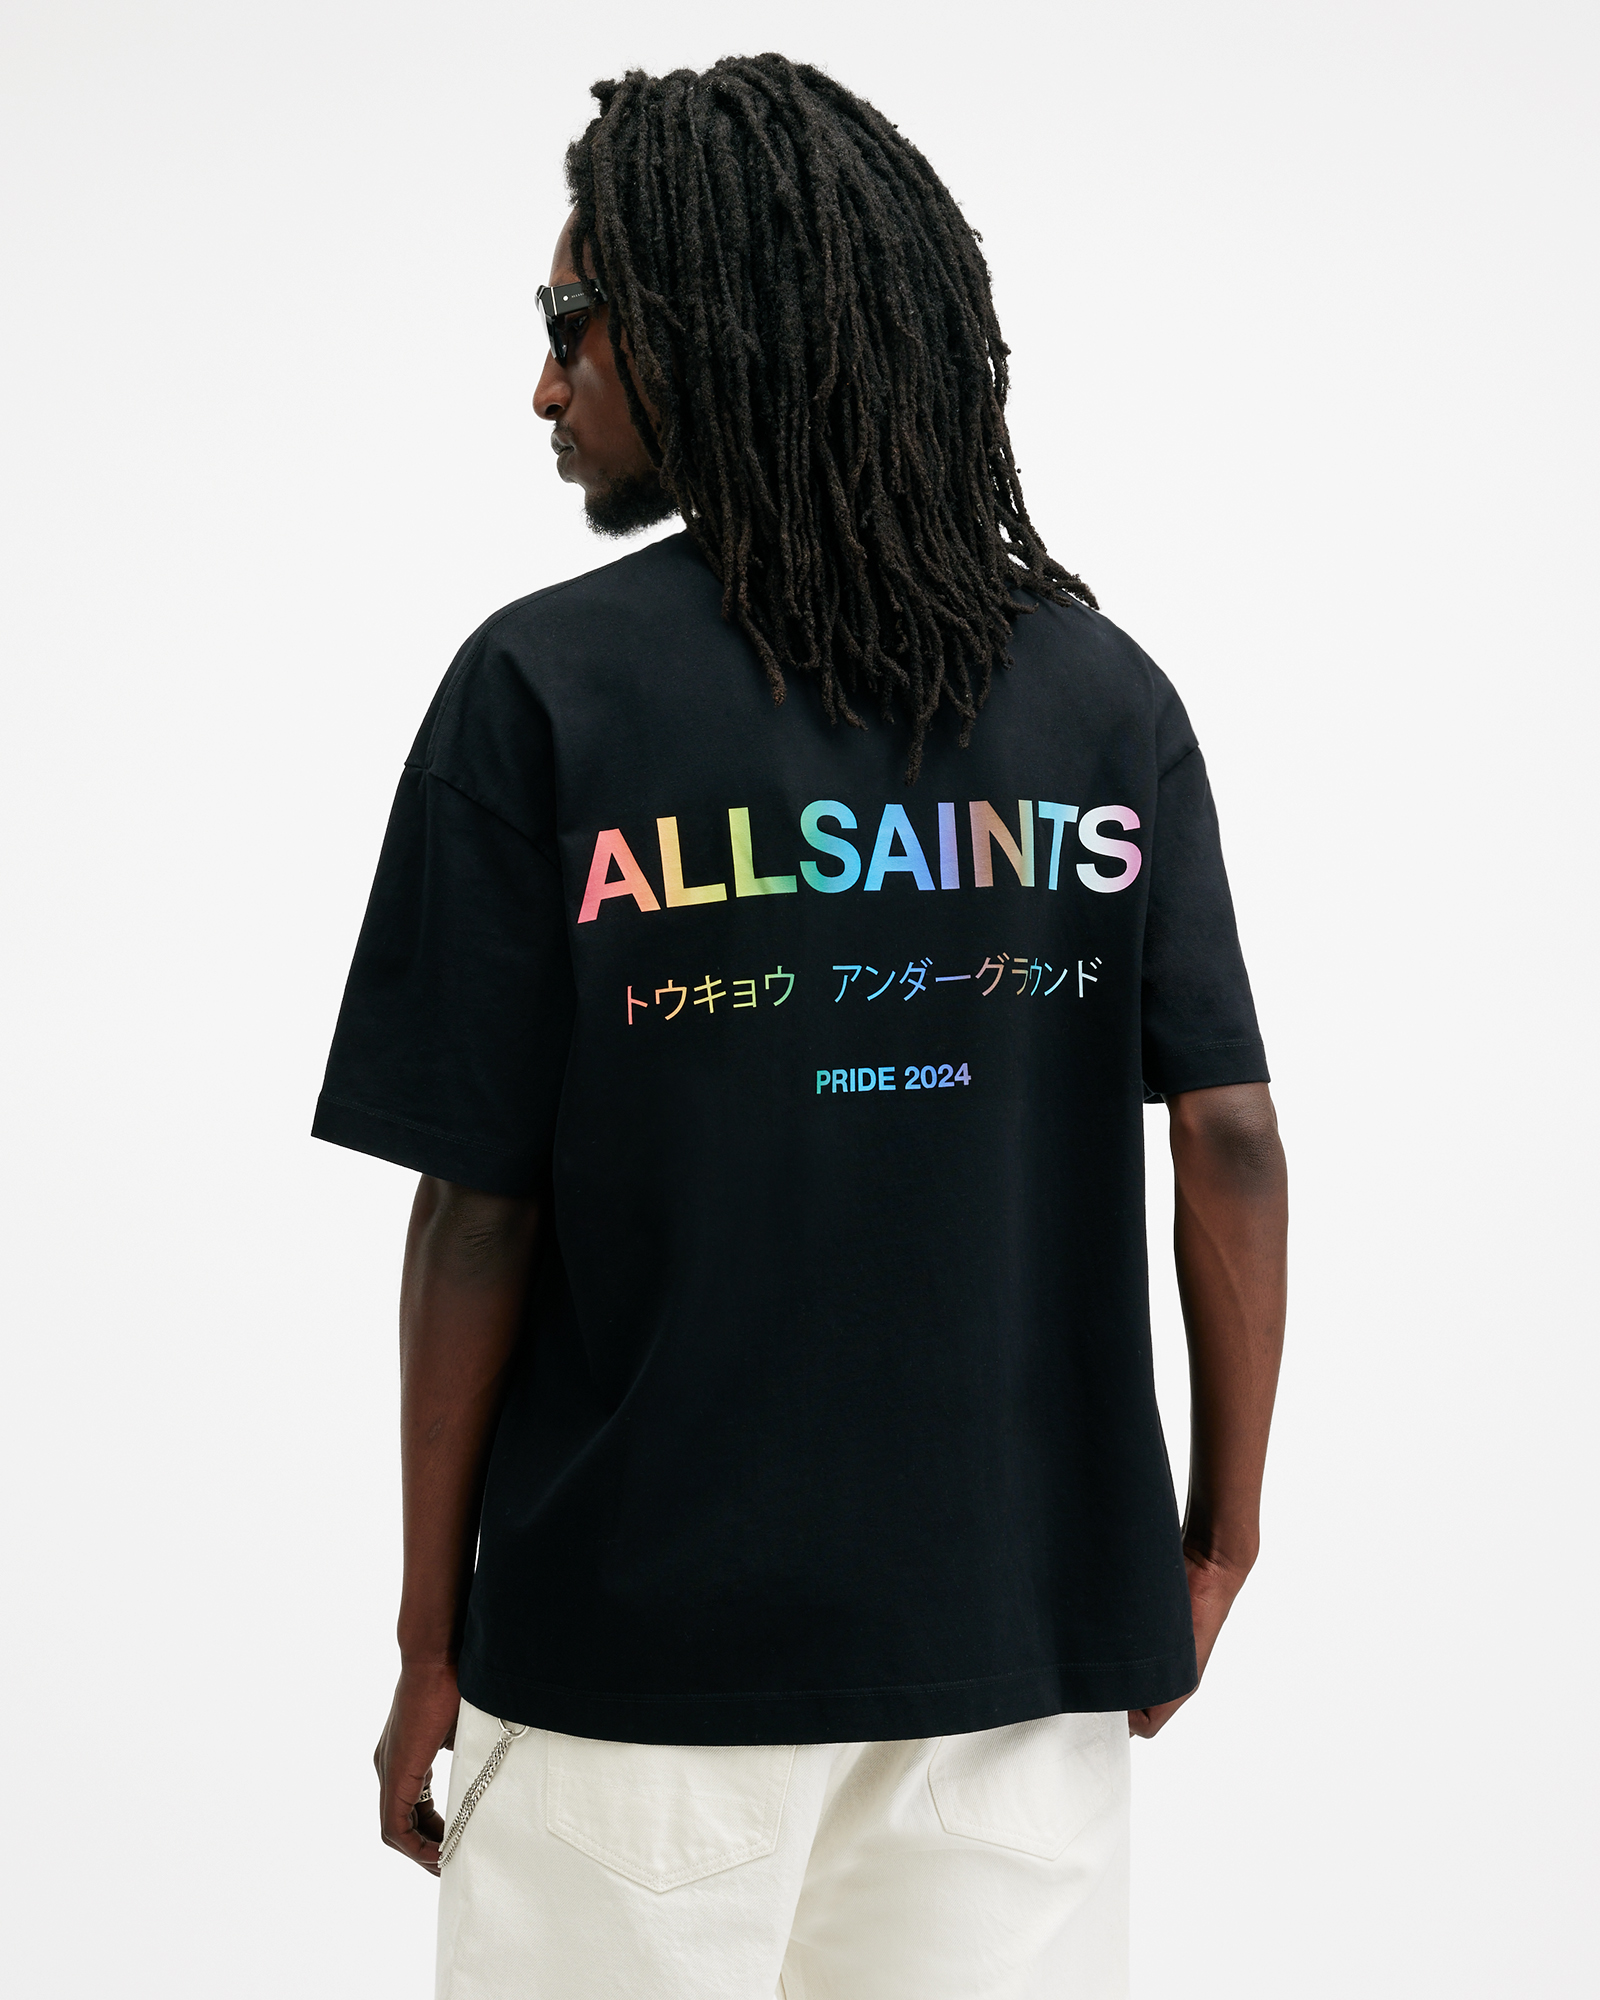 AllSaints Underground Pride Charity T-Shirt